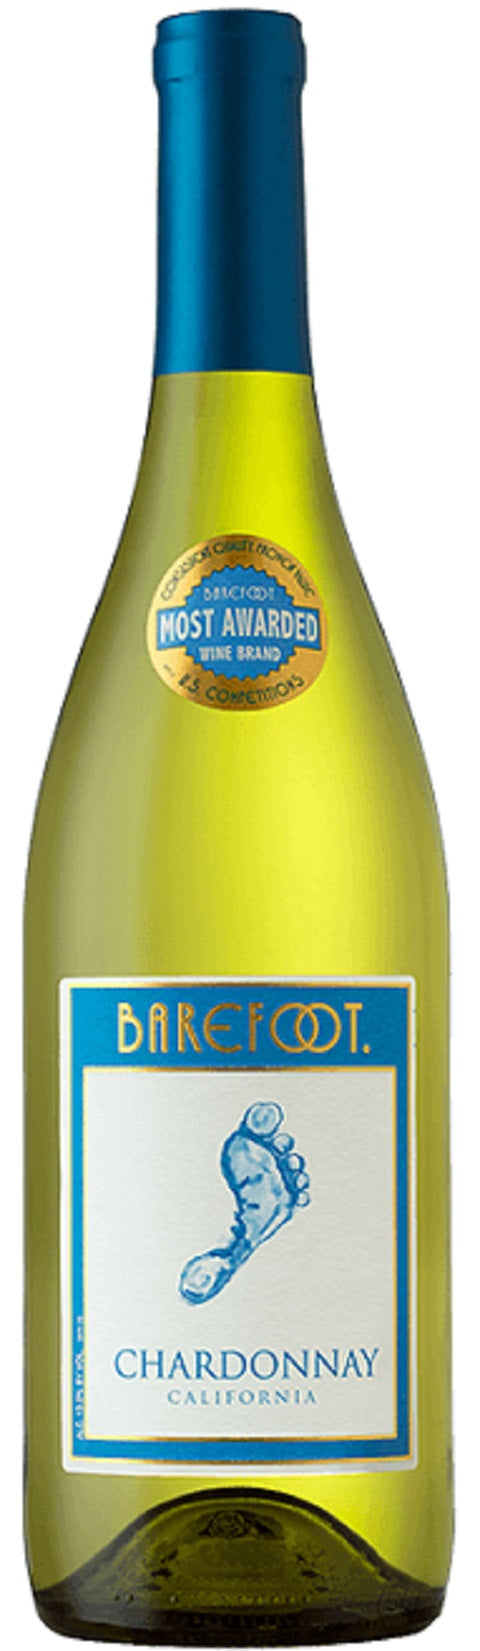 Barefoot Chardonnay Buttery